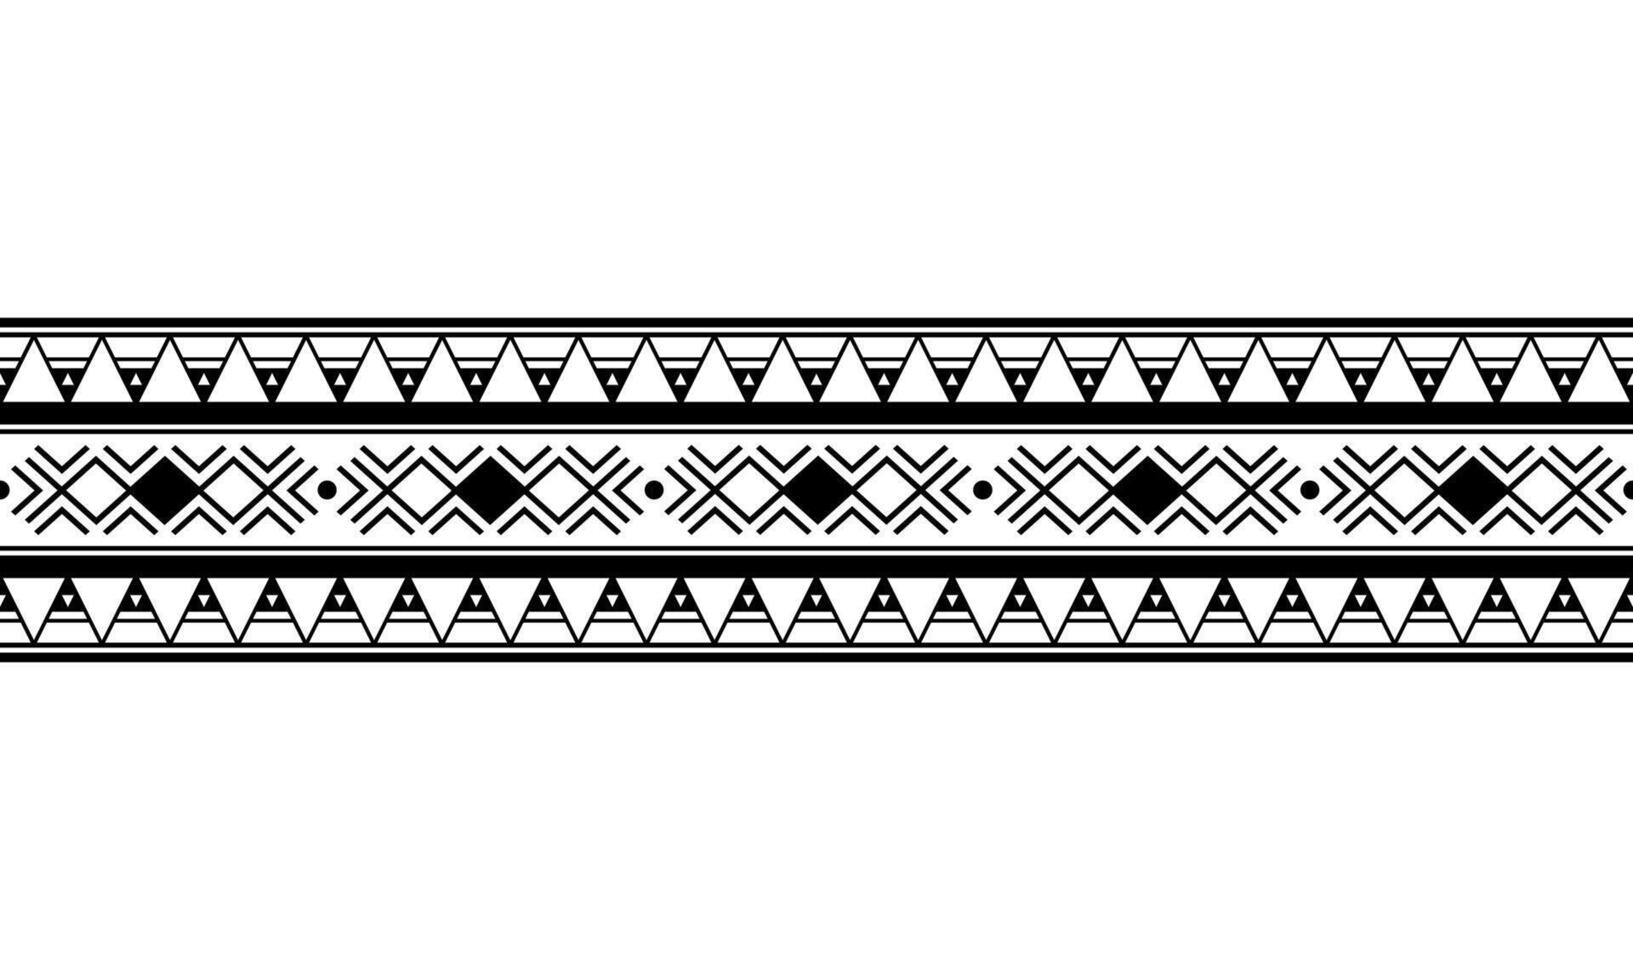 Maori polynesian tattoo bracelet. Tribal sleeve seamless pattern vector. Samoan border tattoo design fore arm or foot. Armband tattoo tribal. vector